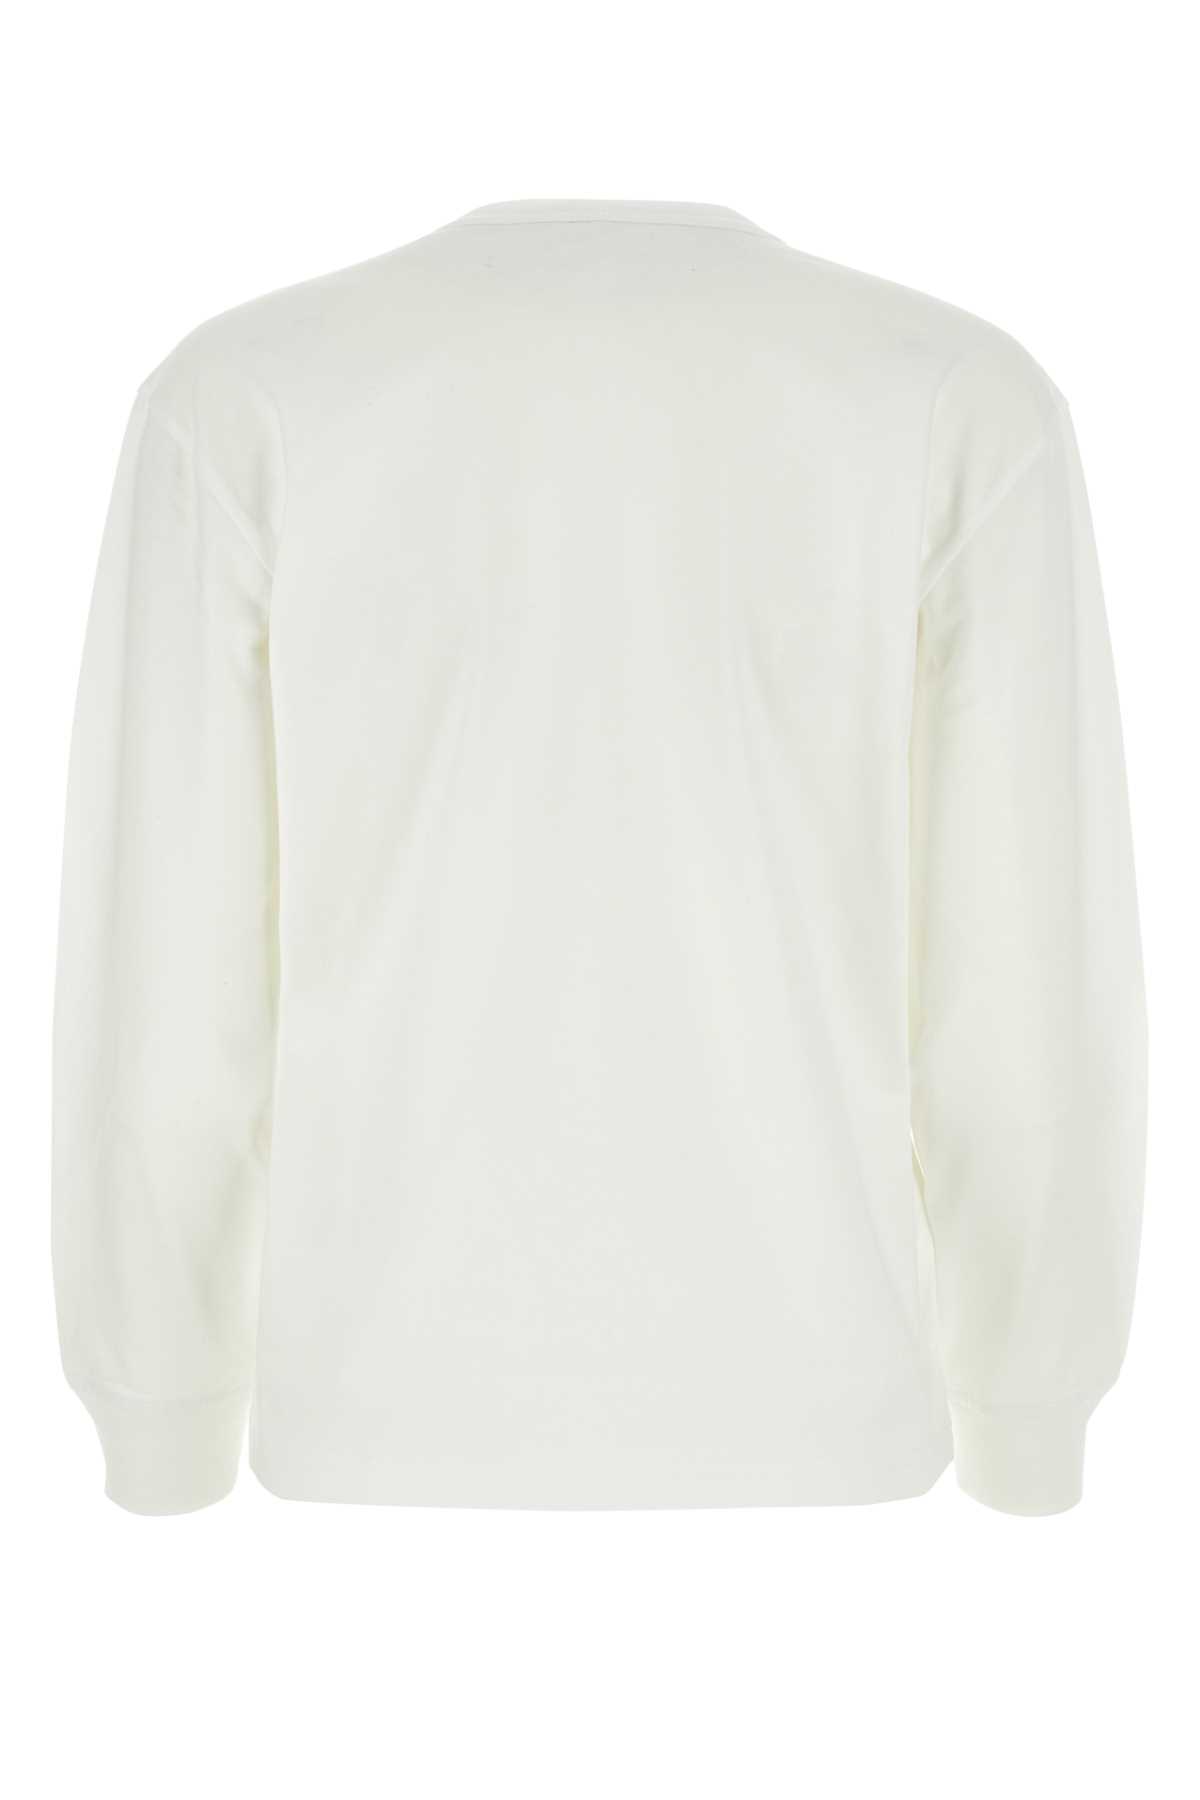 Alexander Wang T White Cotton T-shirt In 100